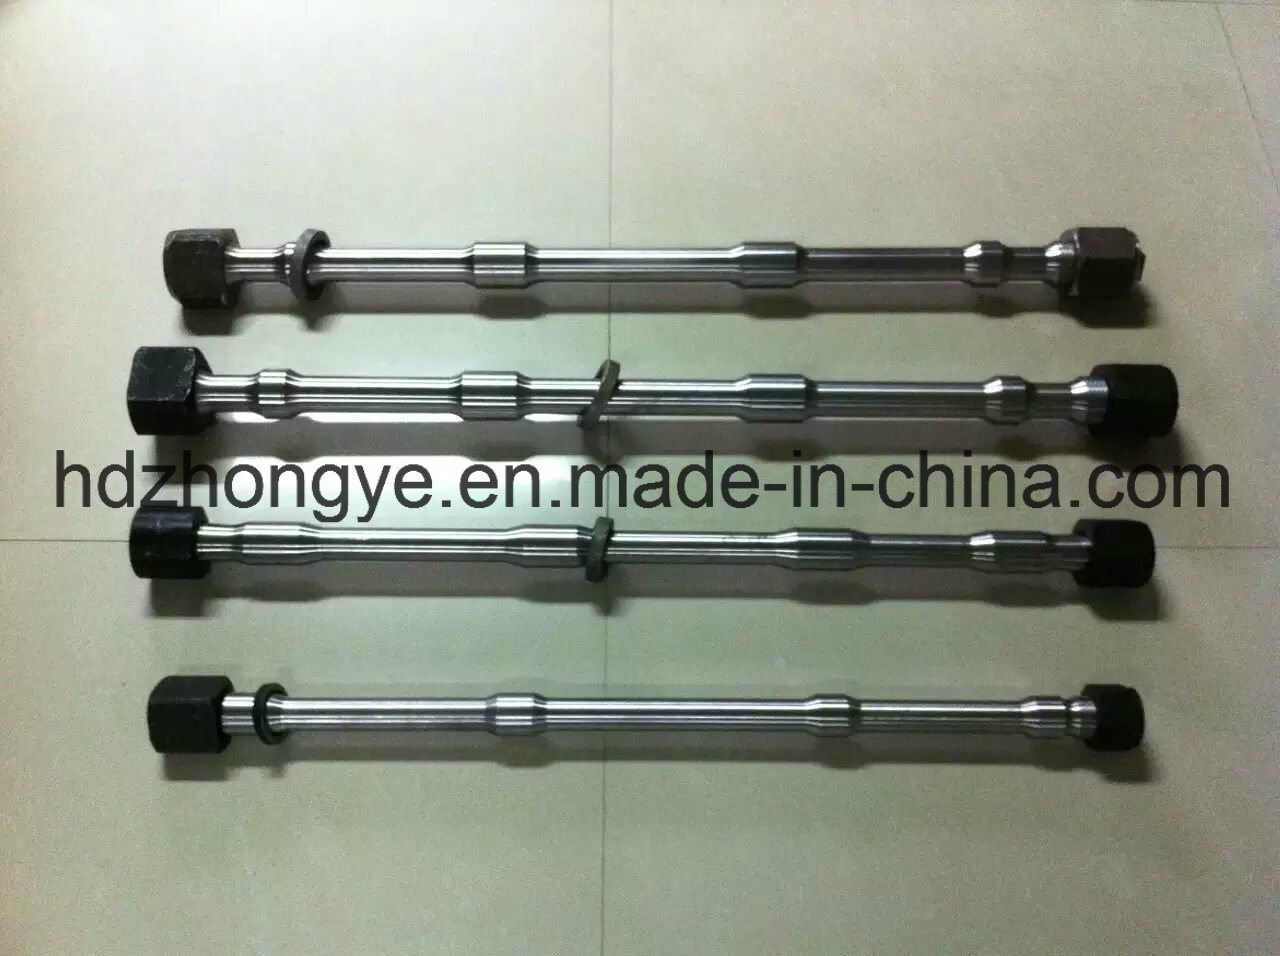 China Cheap price Door Handle Through Bolts - Montabert M Serial Hydraulic Breaker Parts Through Bolt – Zhongye